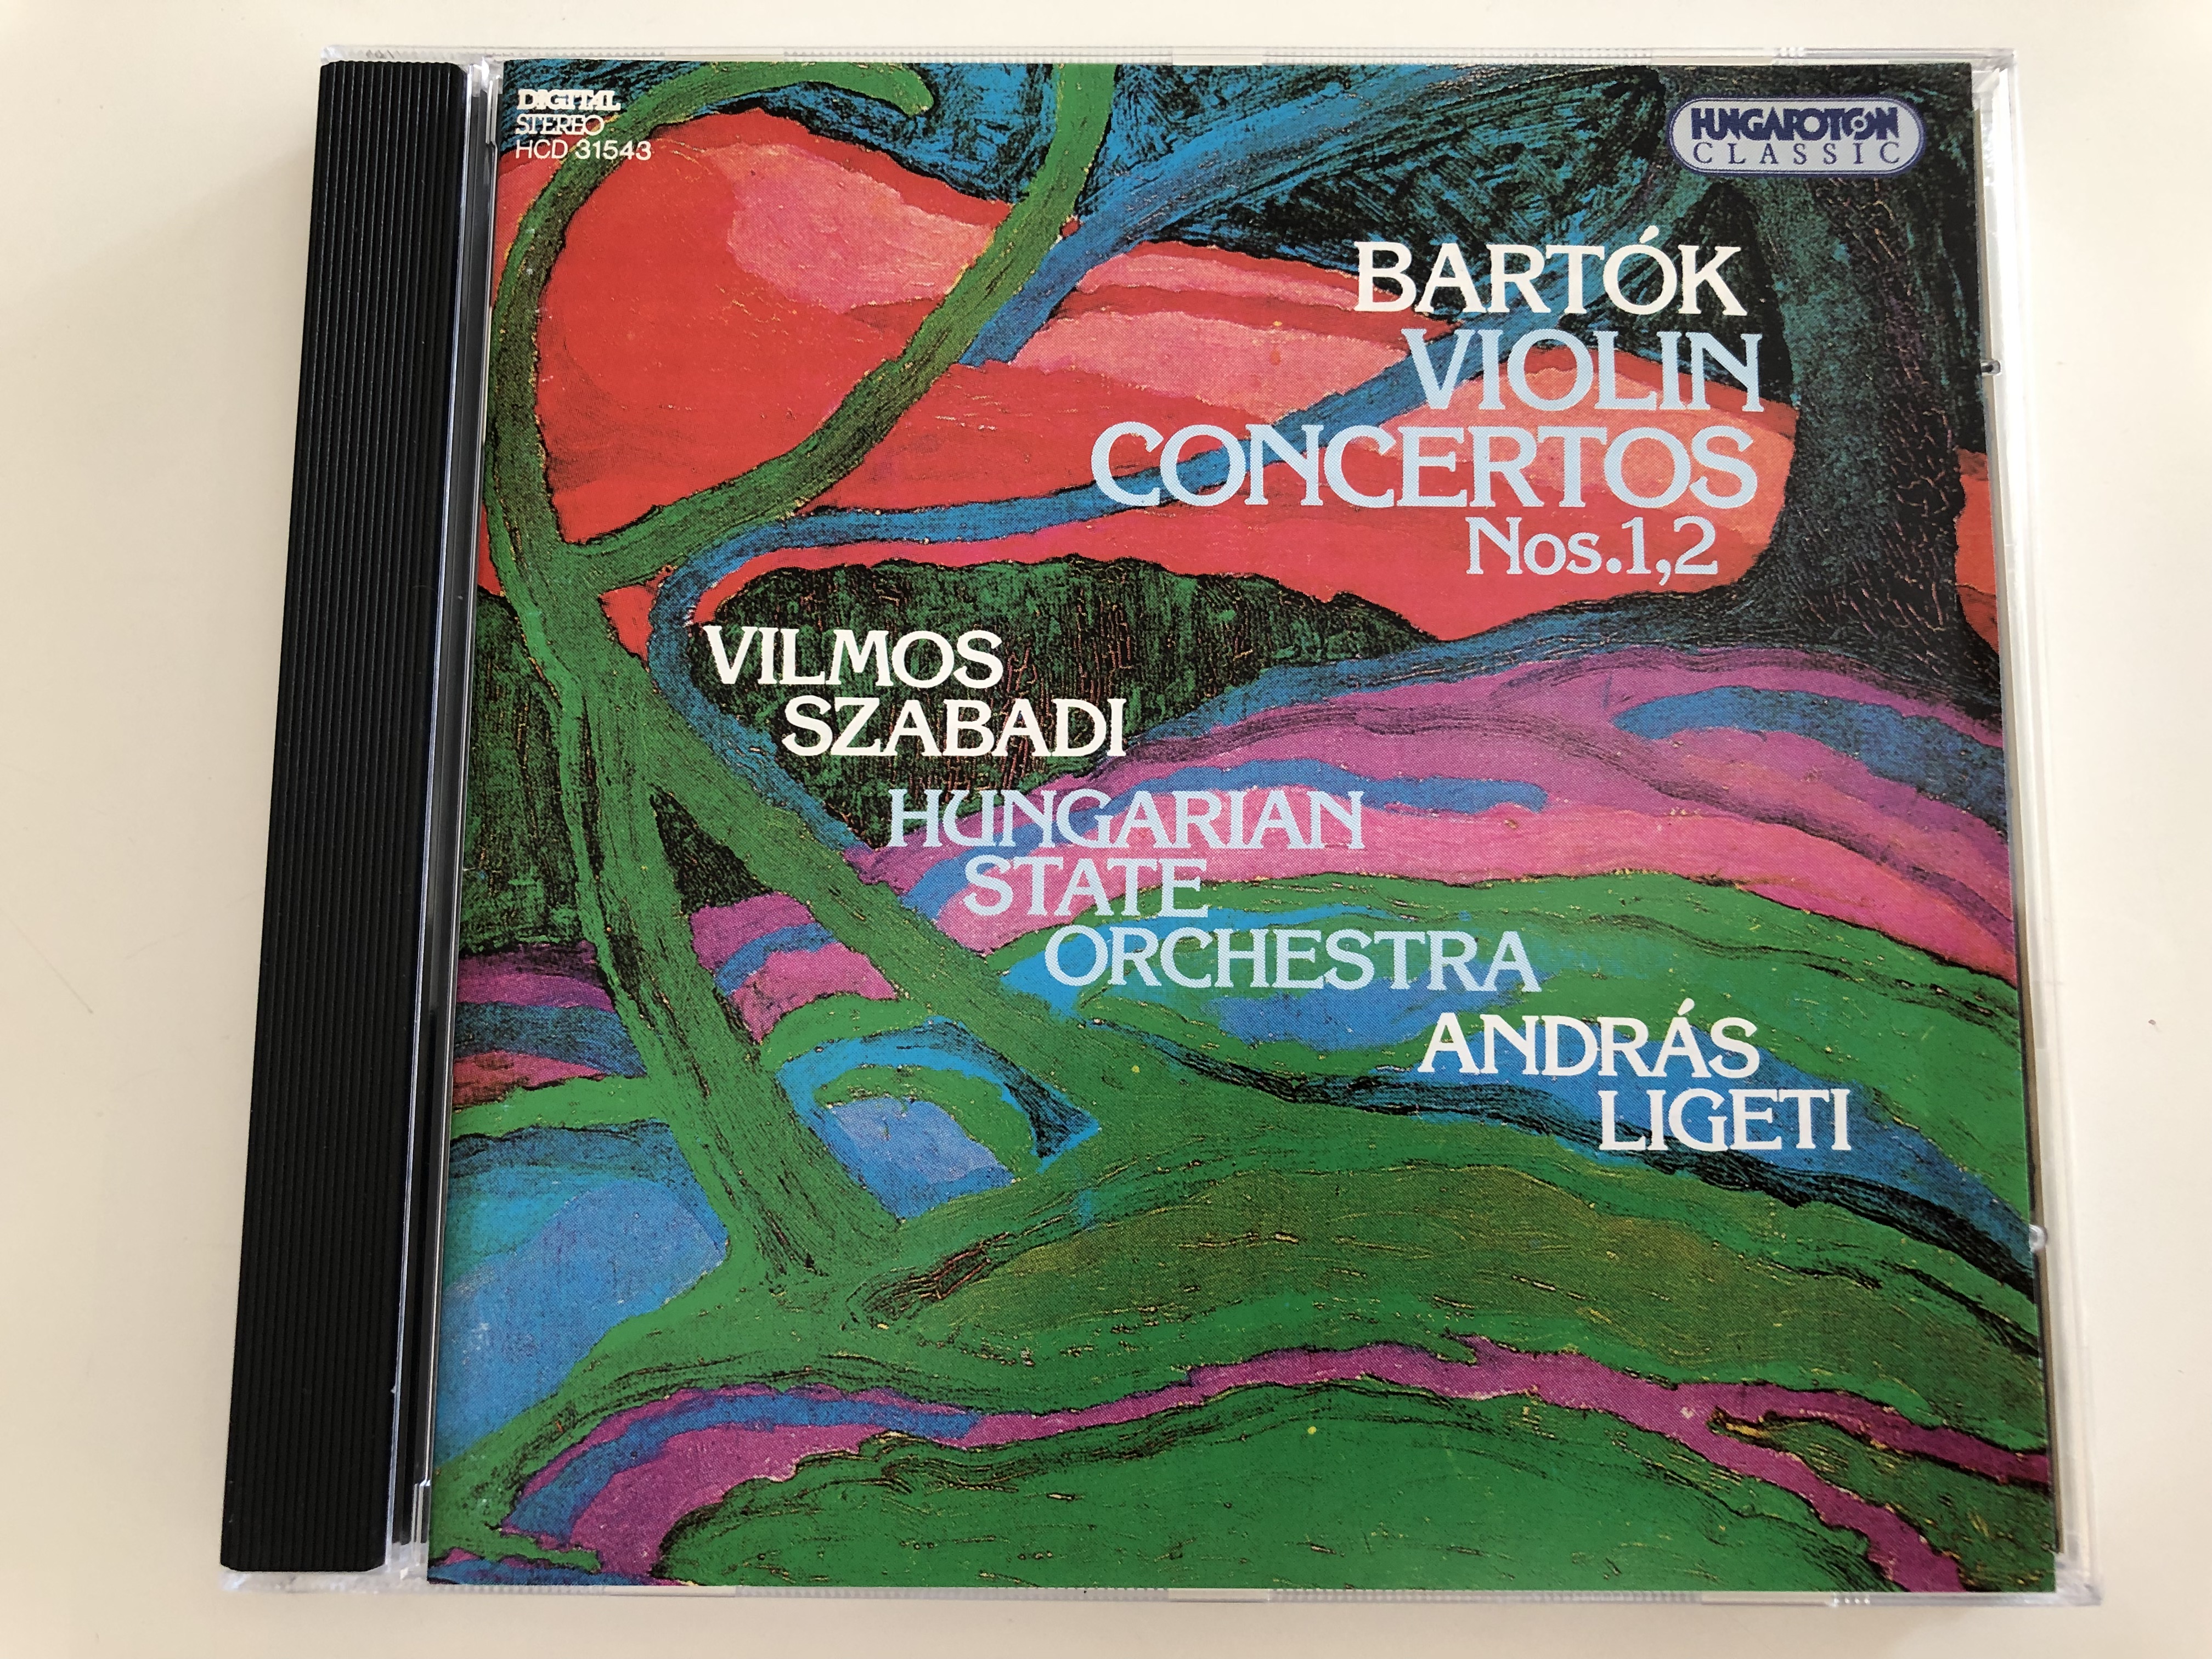 bart-k-violin-concertos-nos.-1-2-vilmos-szabadi-hungarian-state-orchestra-directed-by-andr-s-ligeti-hungaroton-classic-audio-cd-1994-hcd-31543-1-.jpg